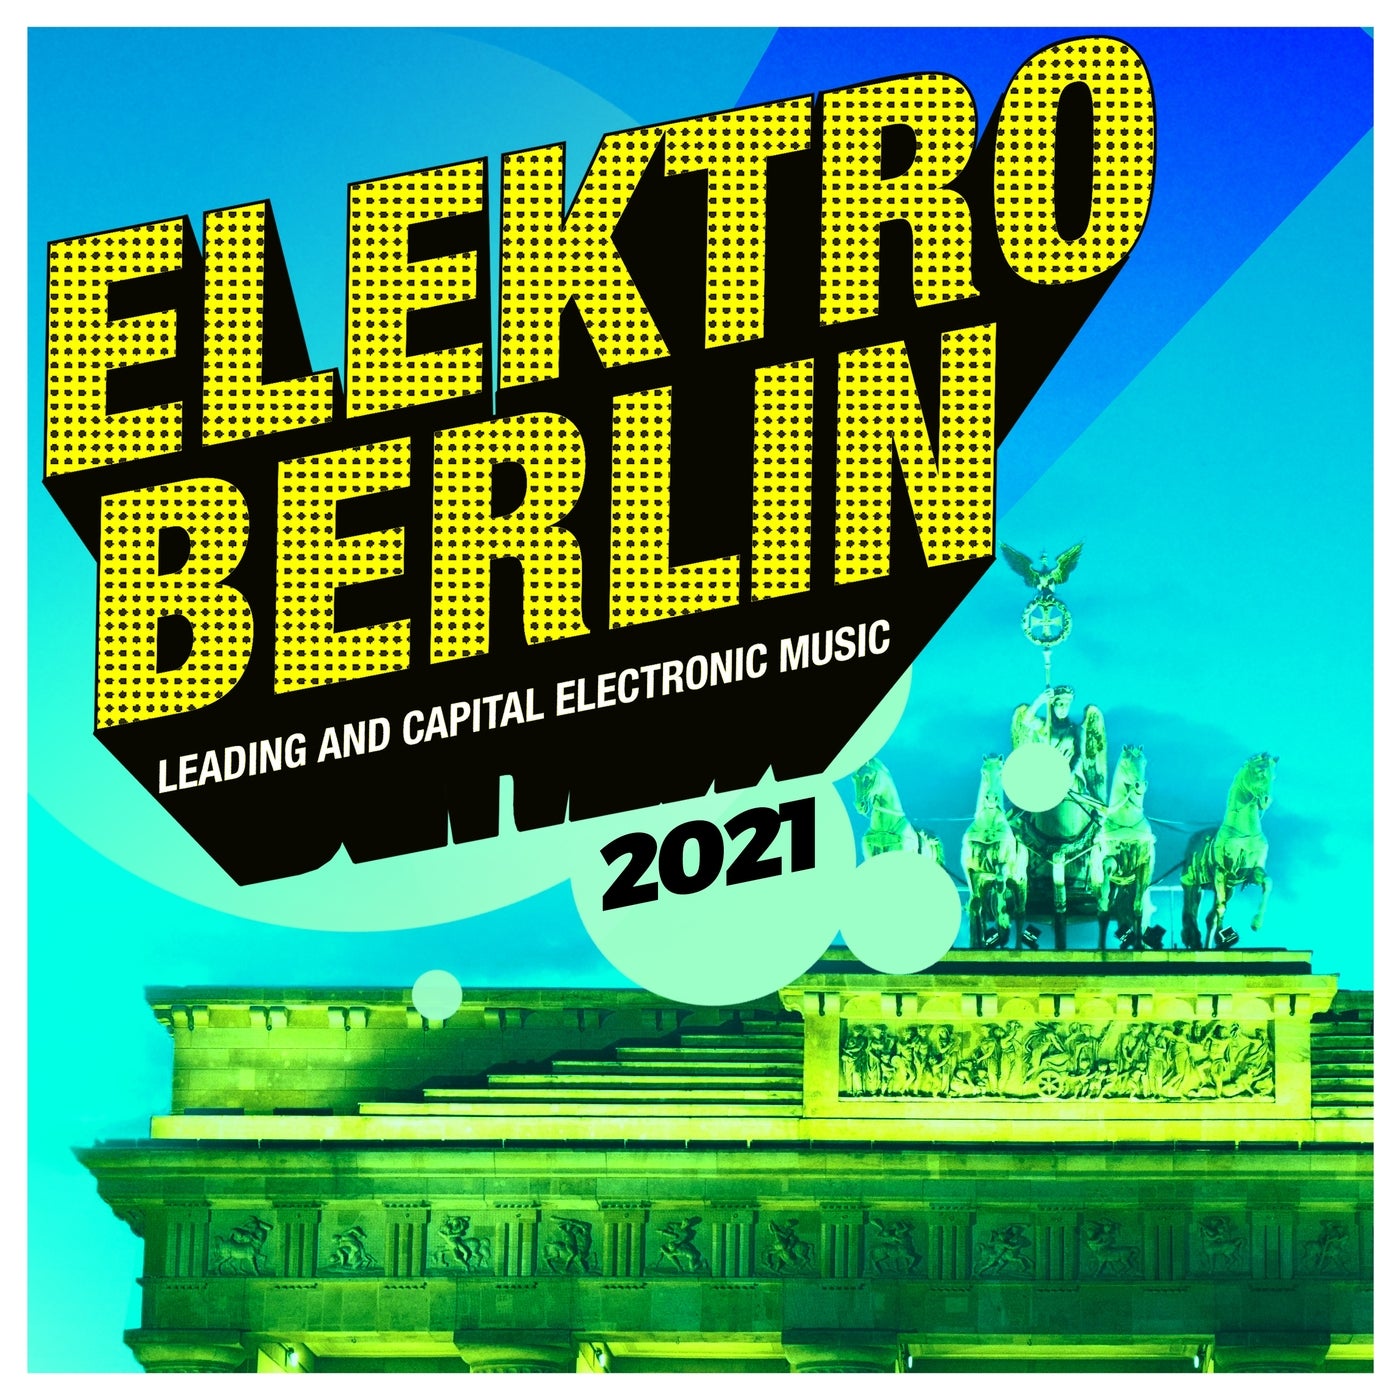 Elektro Berlin 2021: Leading and Capital Electronic Music